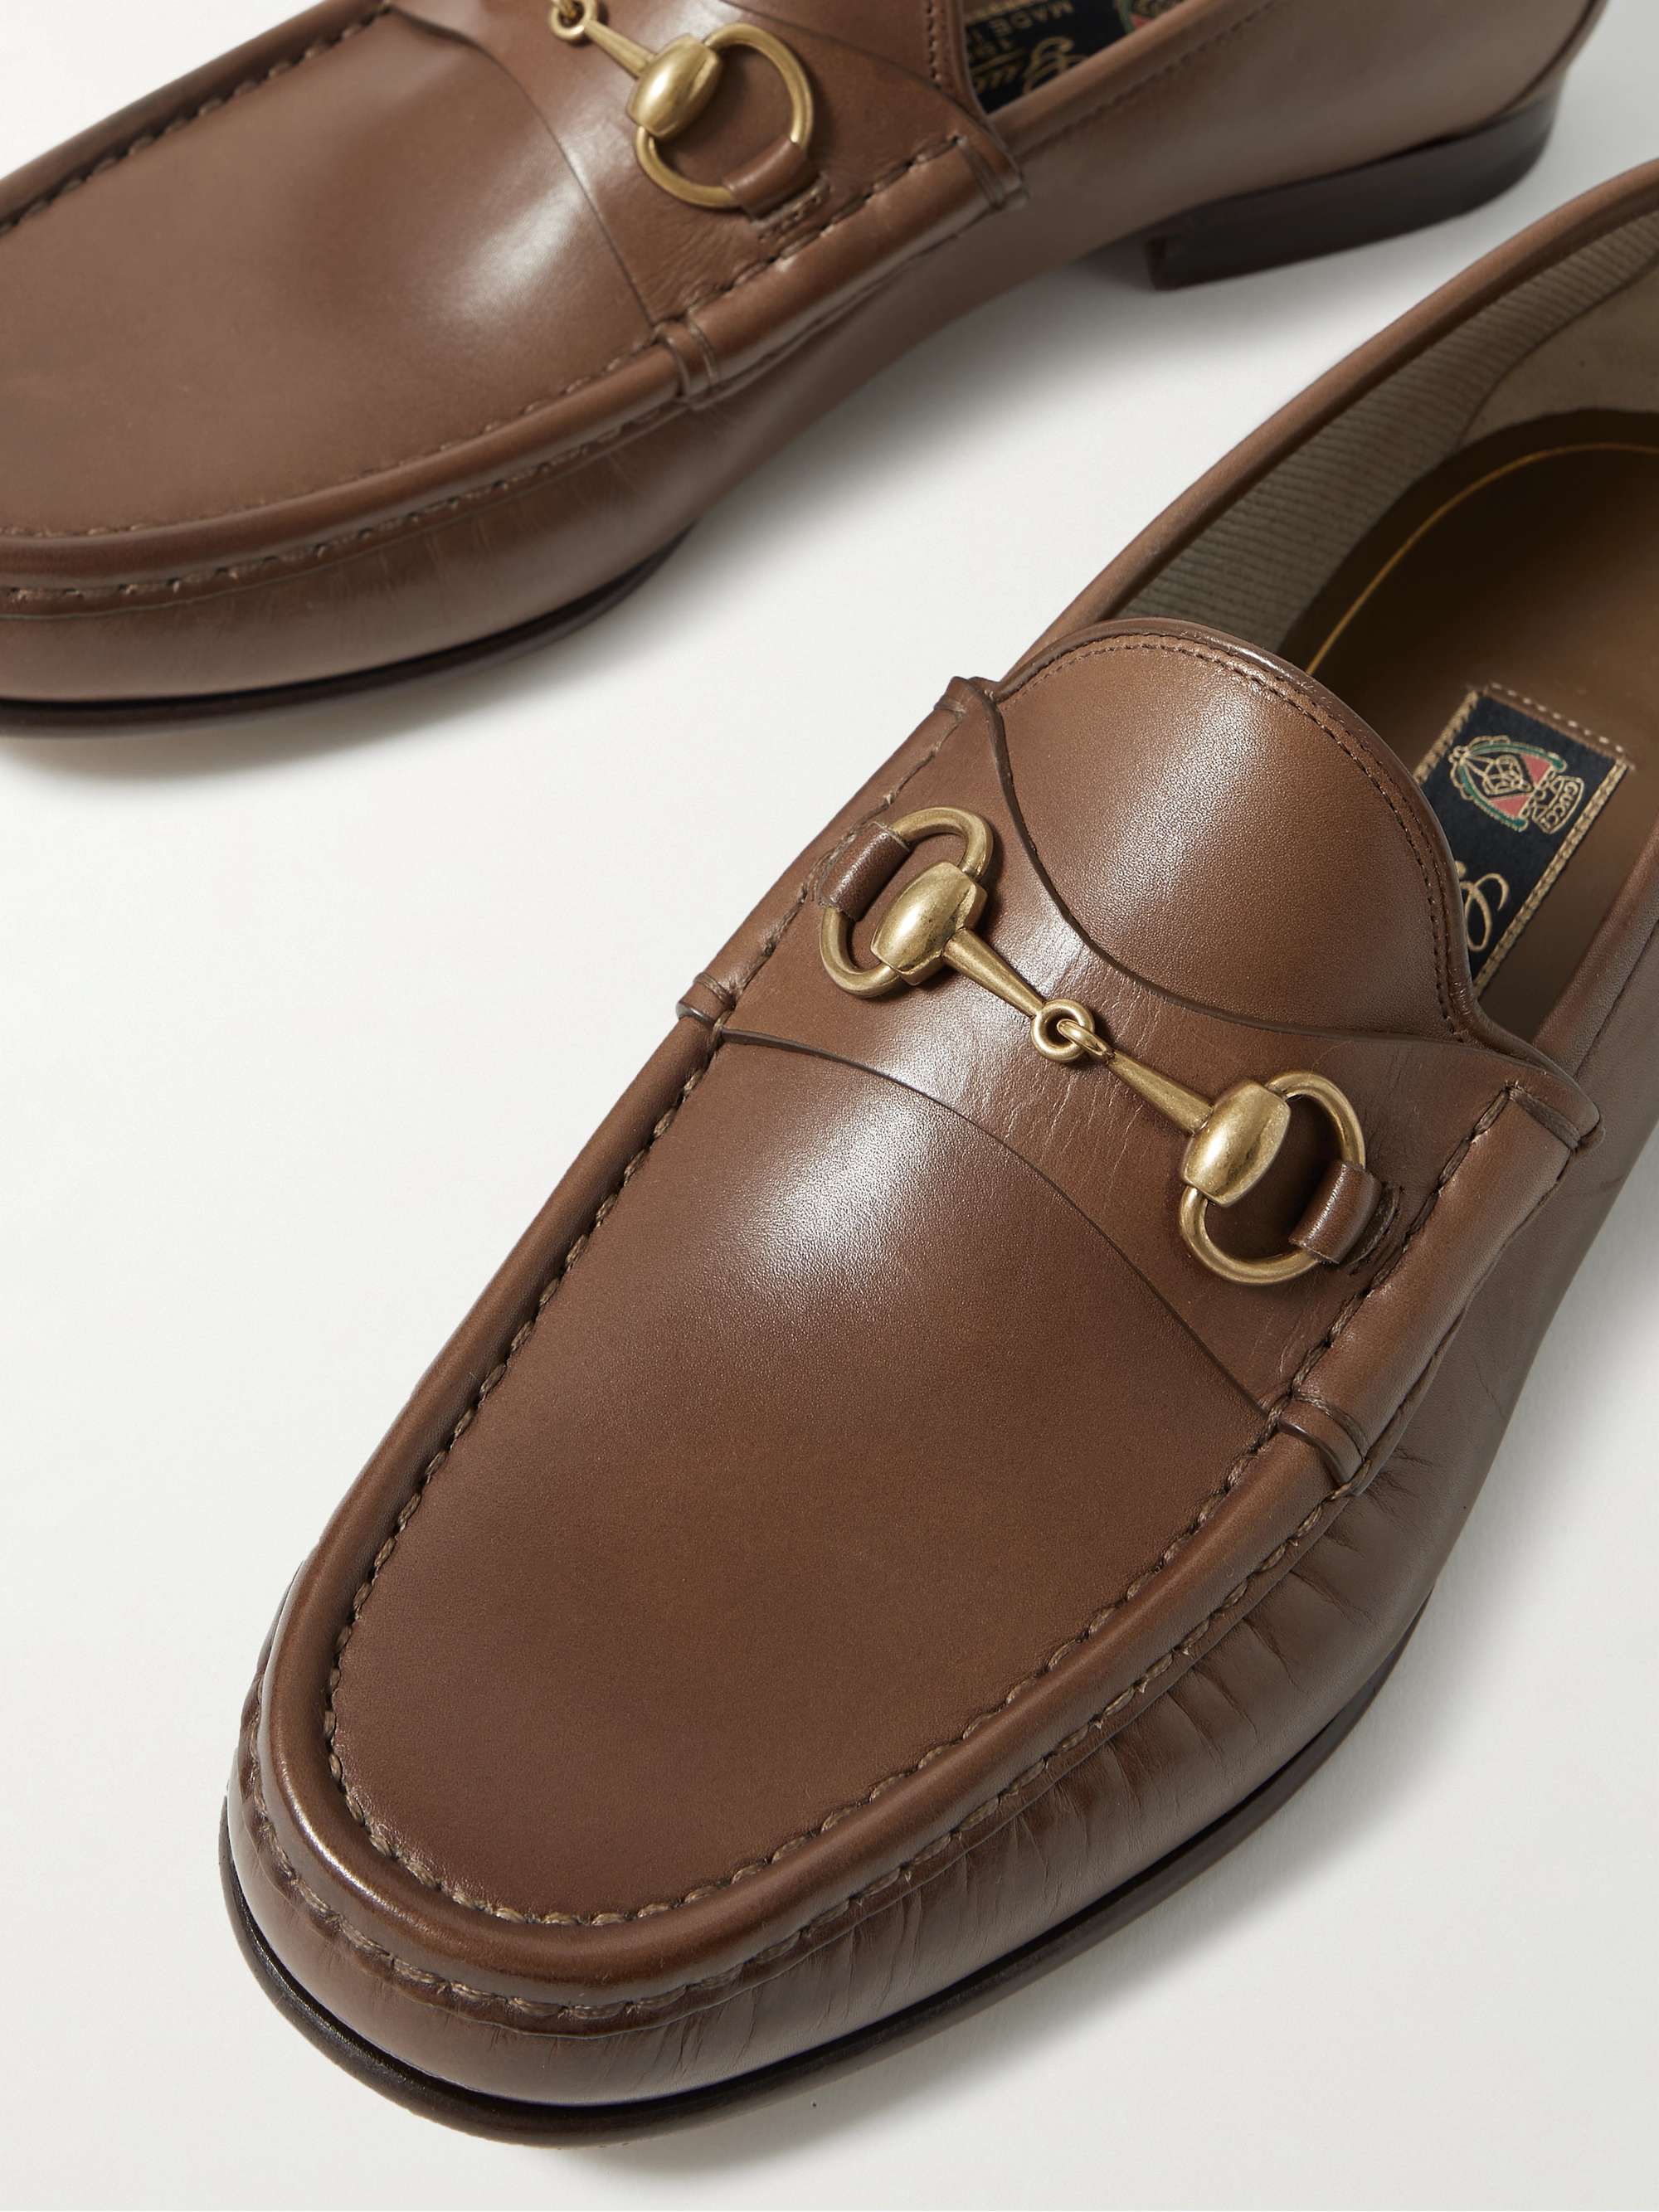 GUCCI Horsebit Leather Loafers | MR PORTER